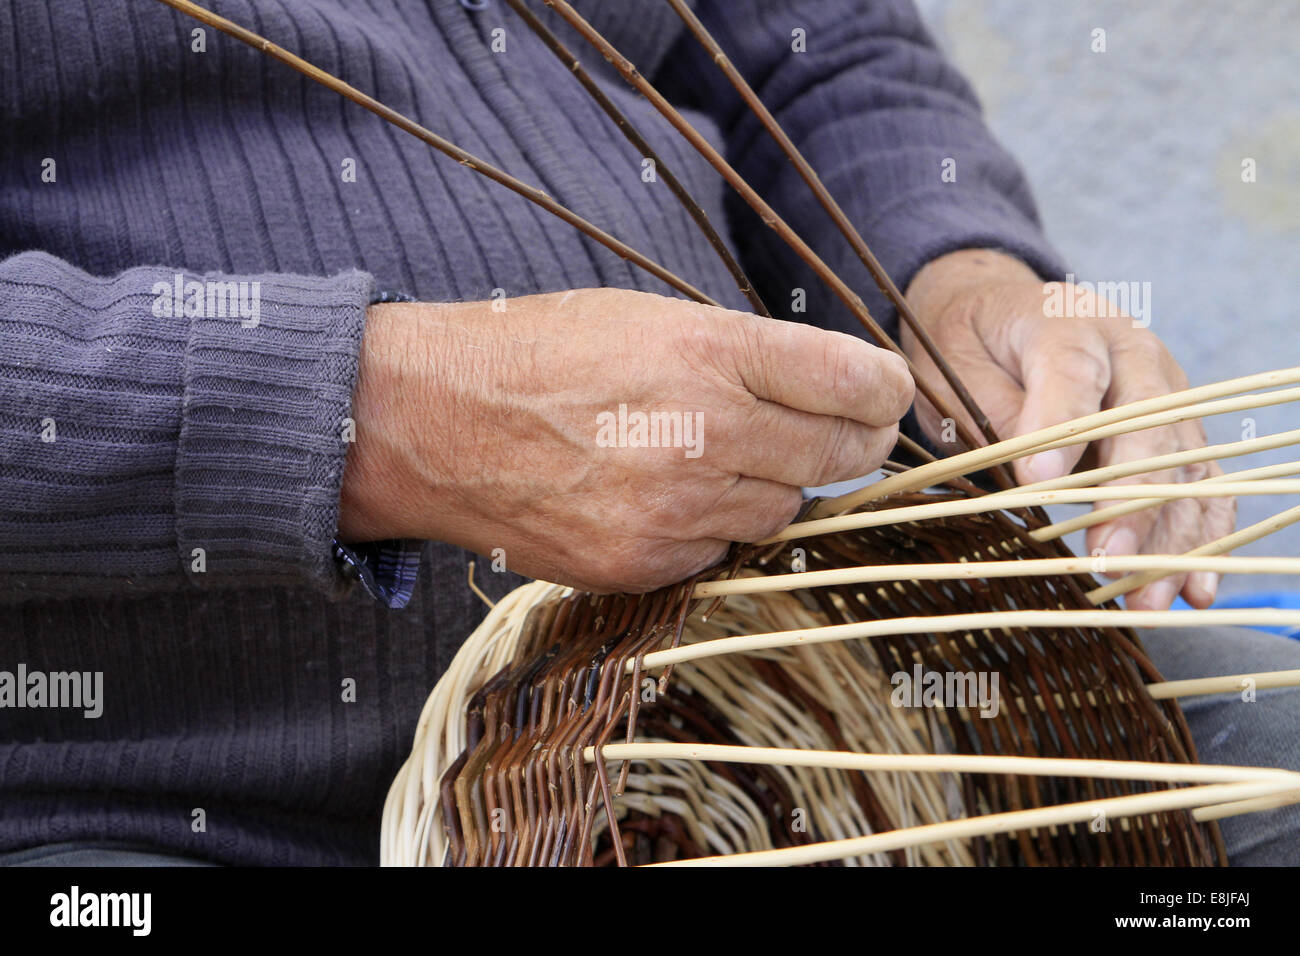 Basketry. Stock Photo